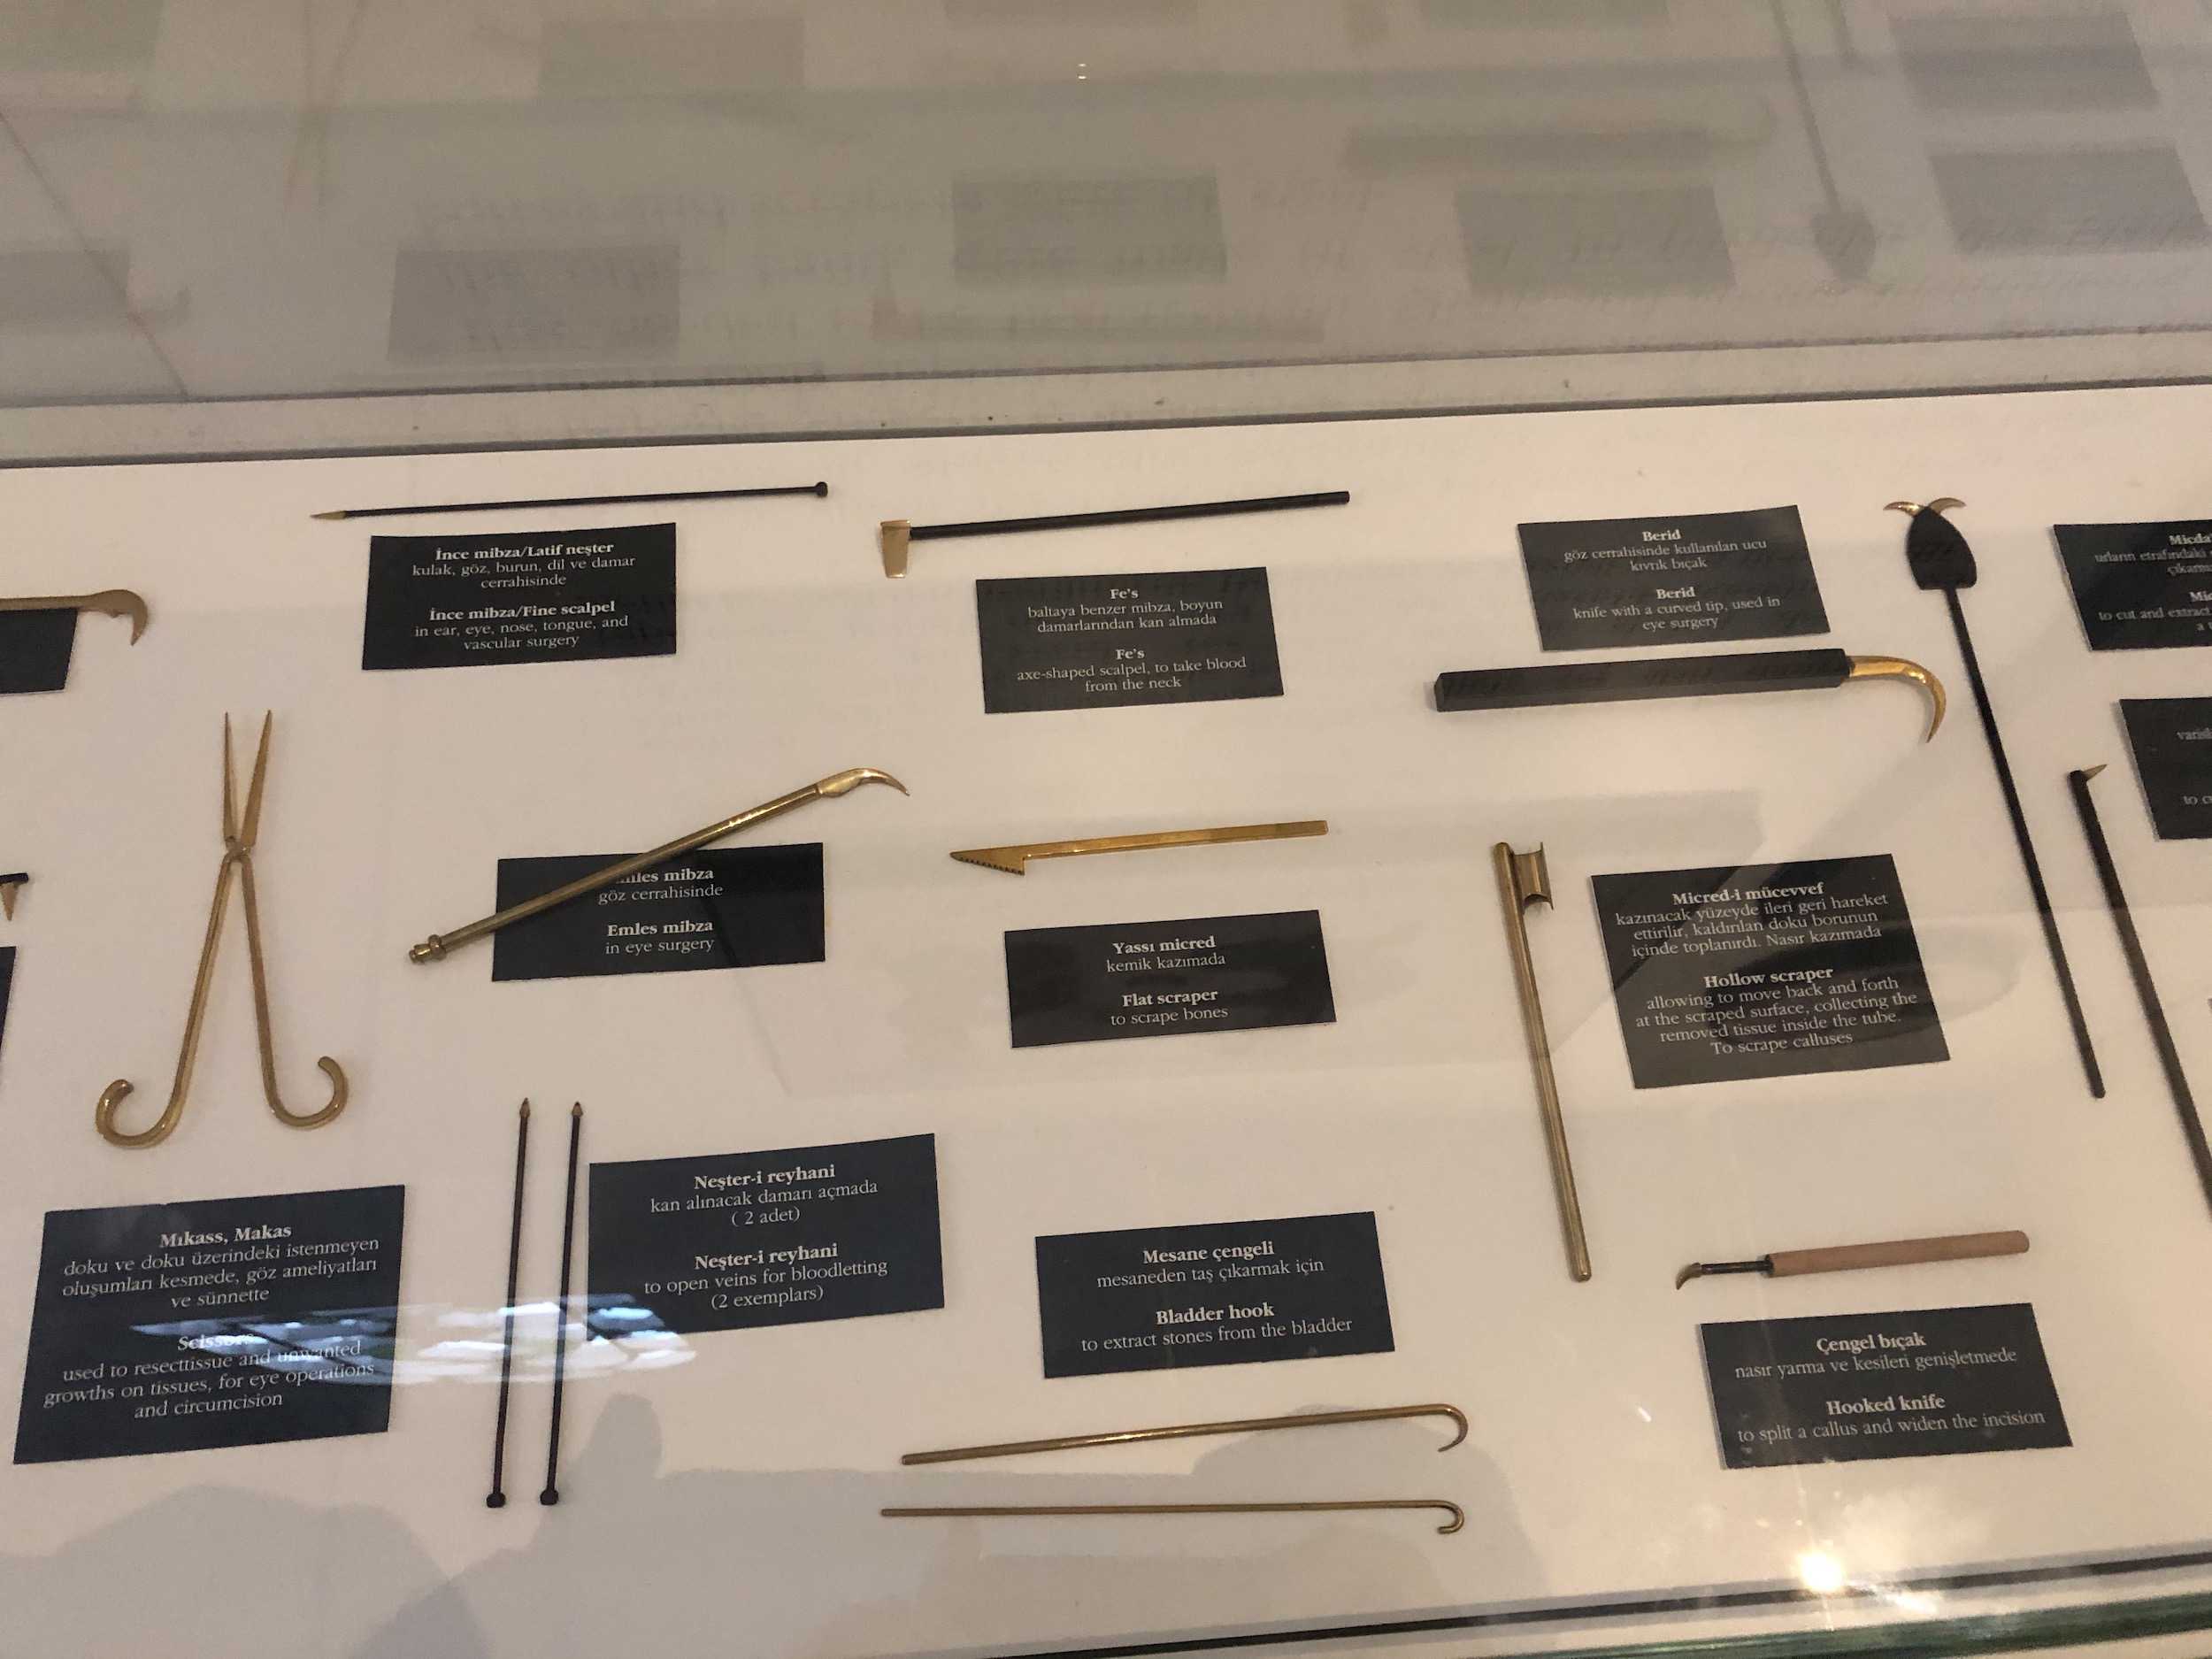 Ottoman medical tools